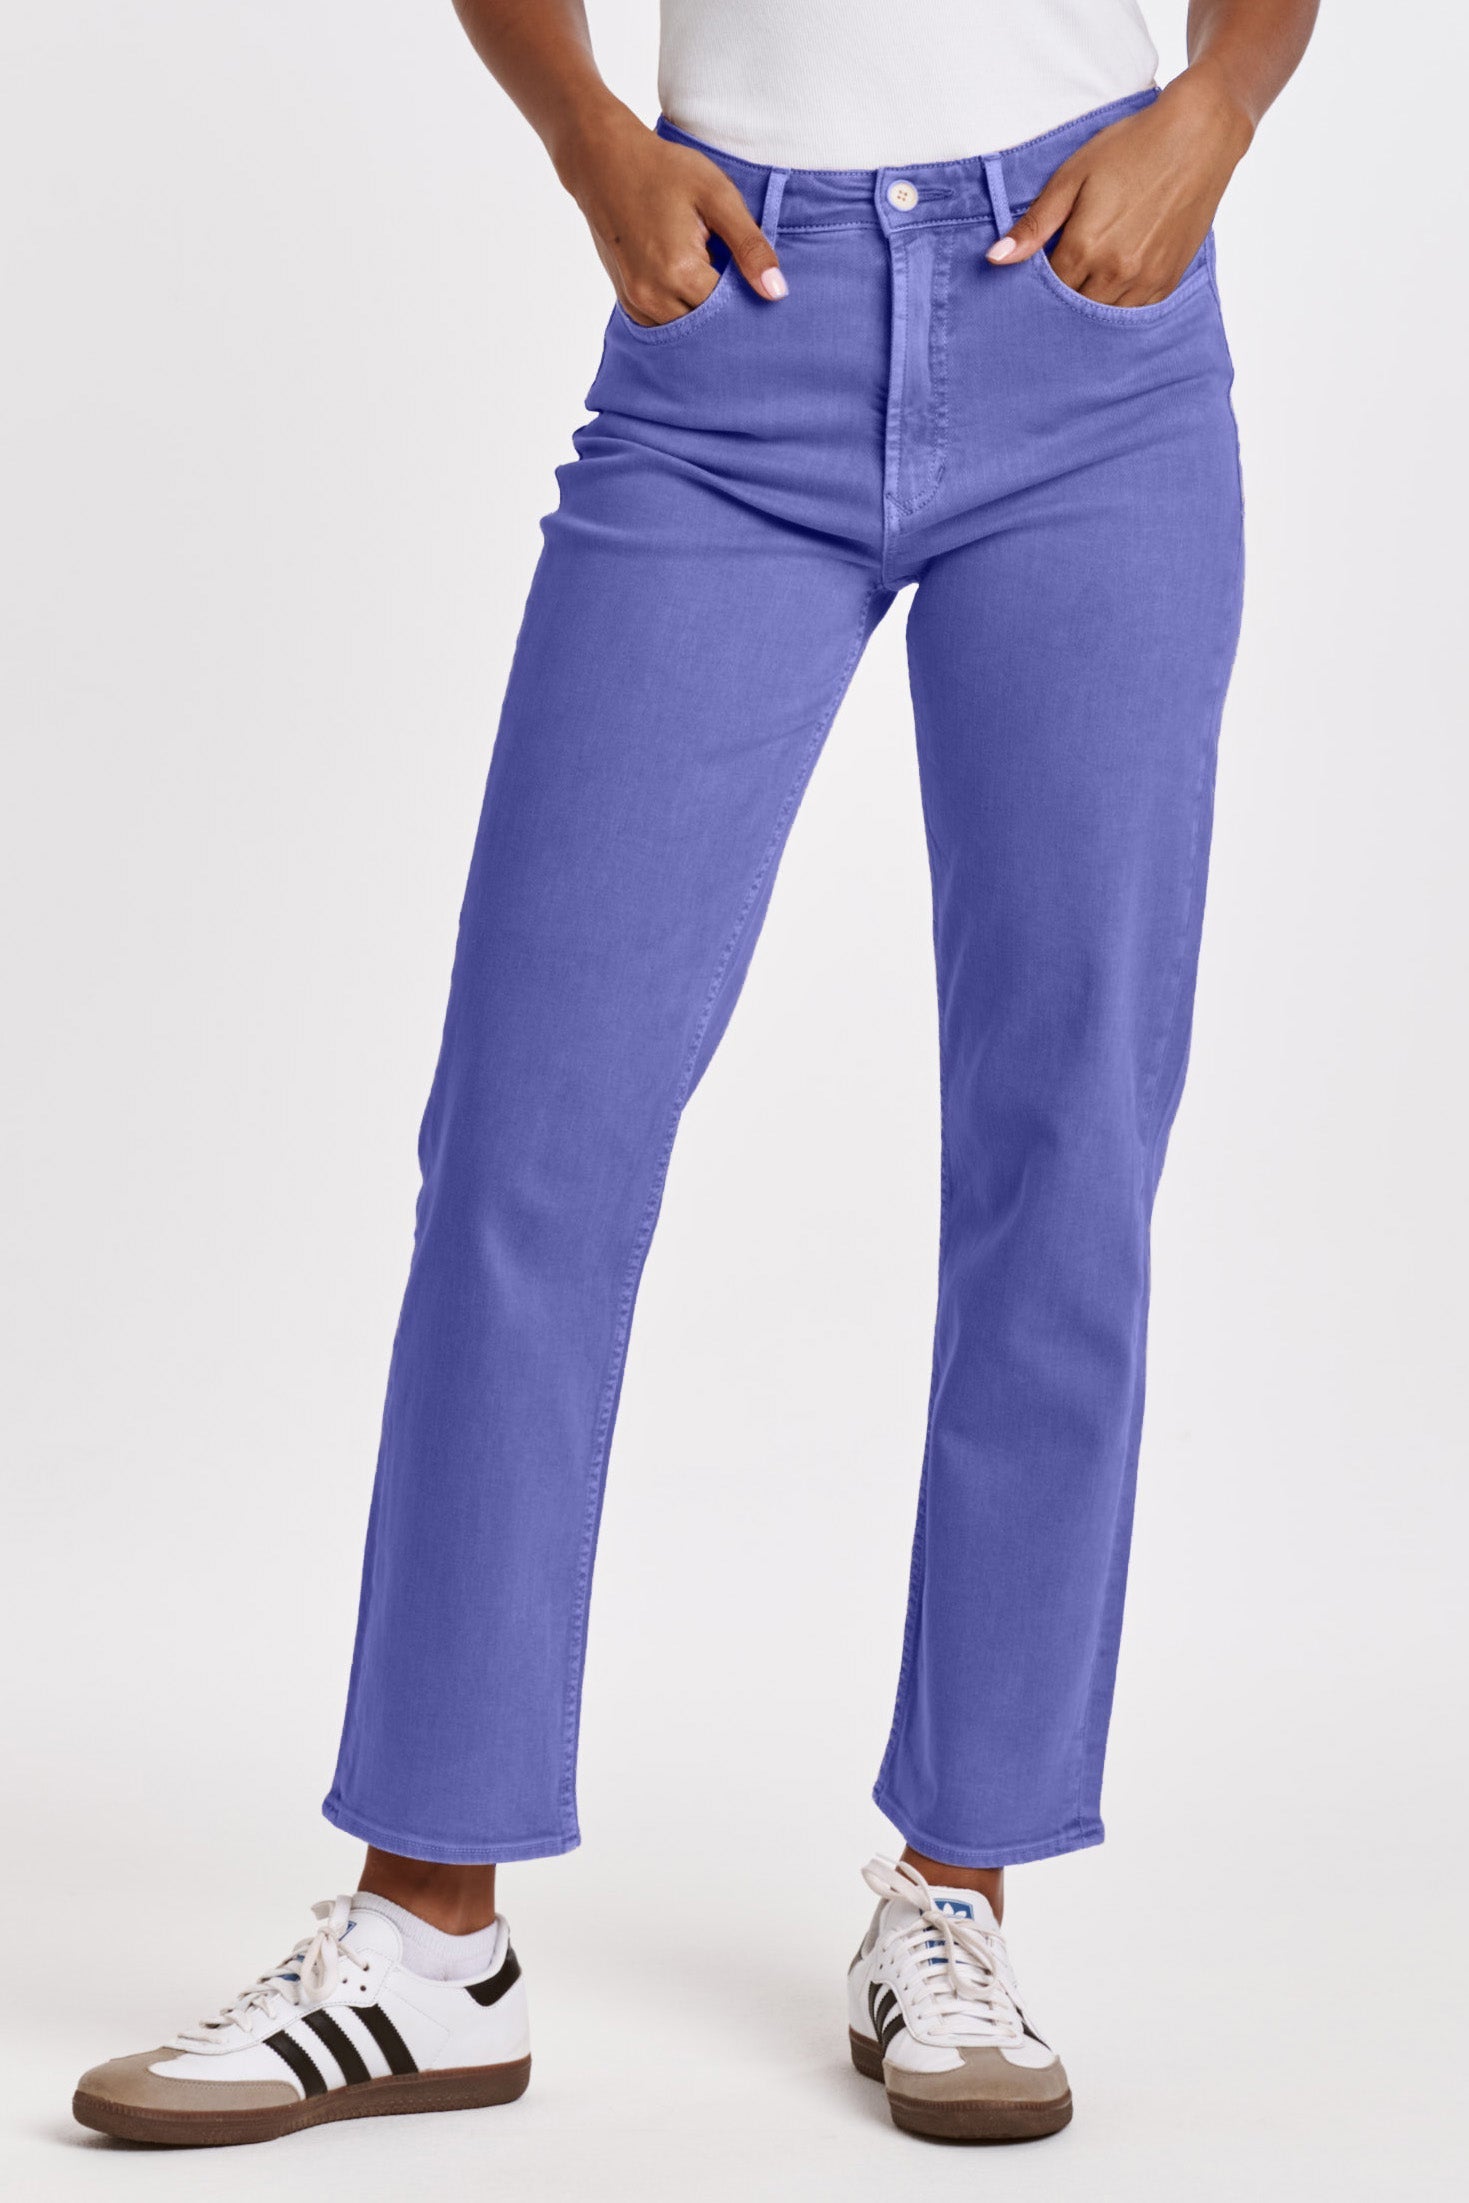 Cobalt blue Jeans Denim Pants, jeans, blue, jean, dark Blue png | PNGWing